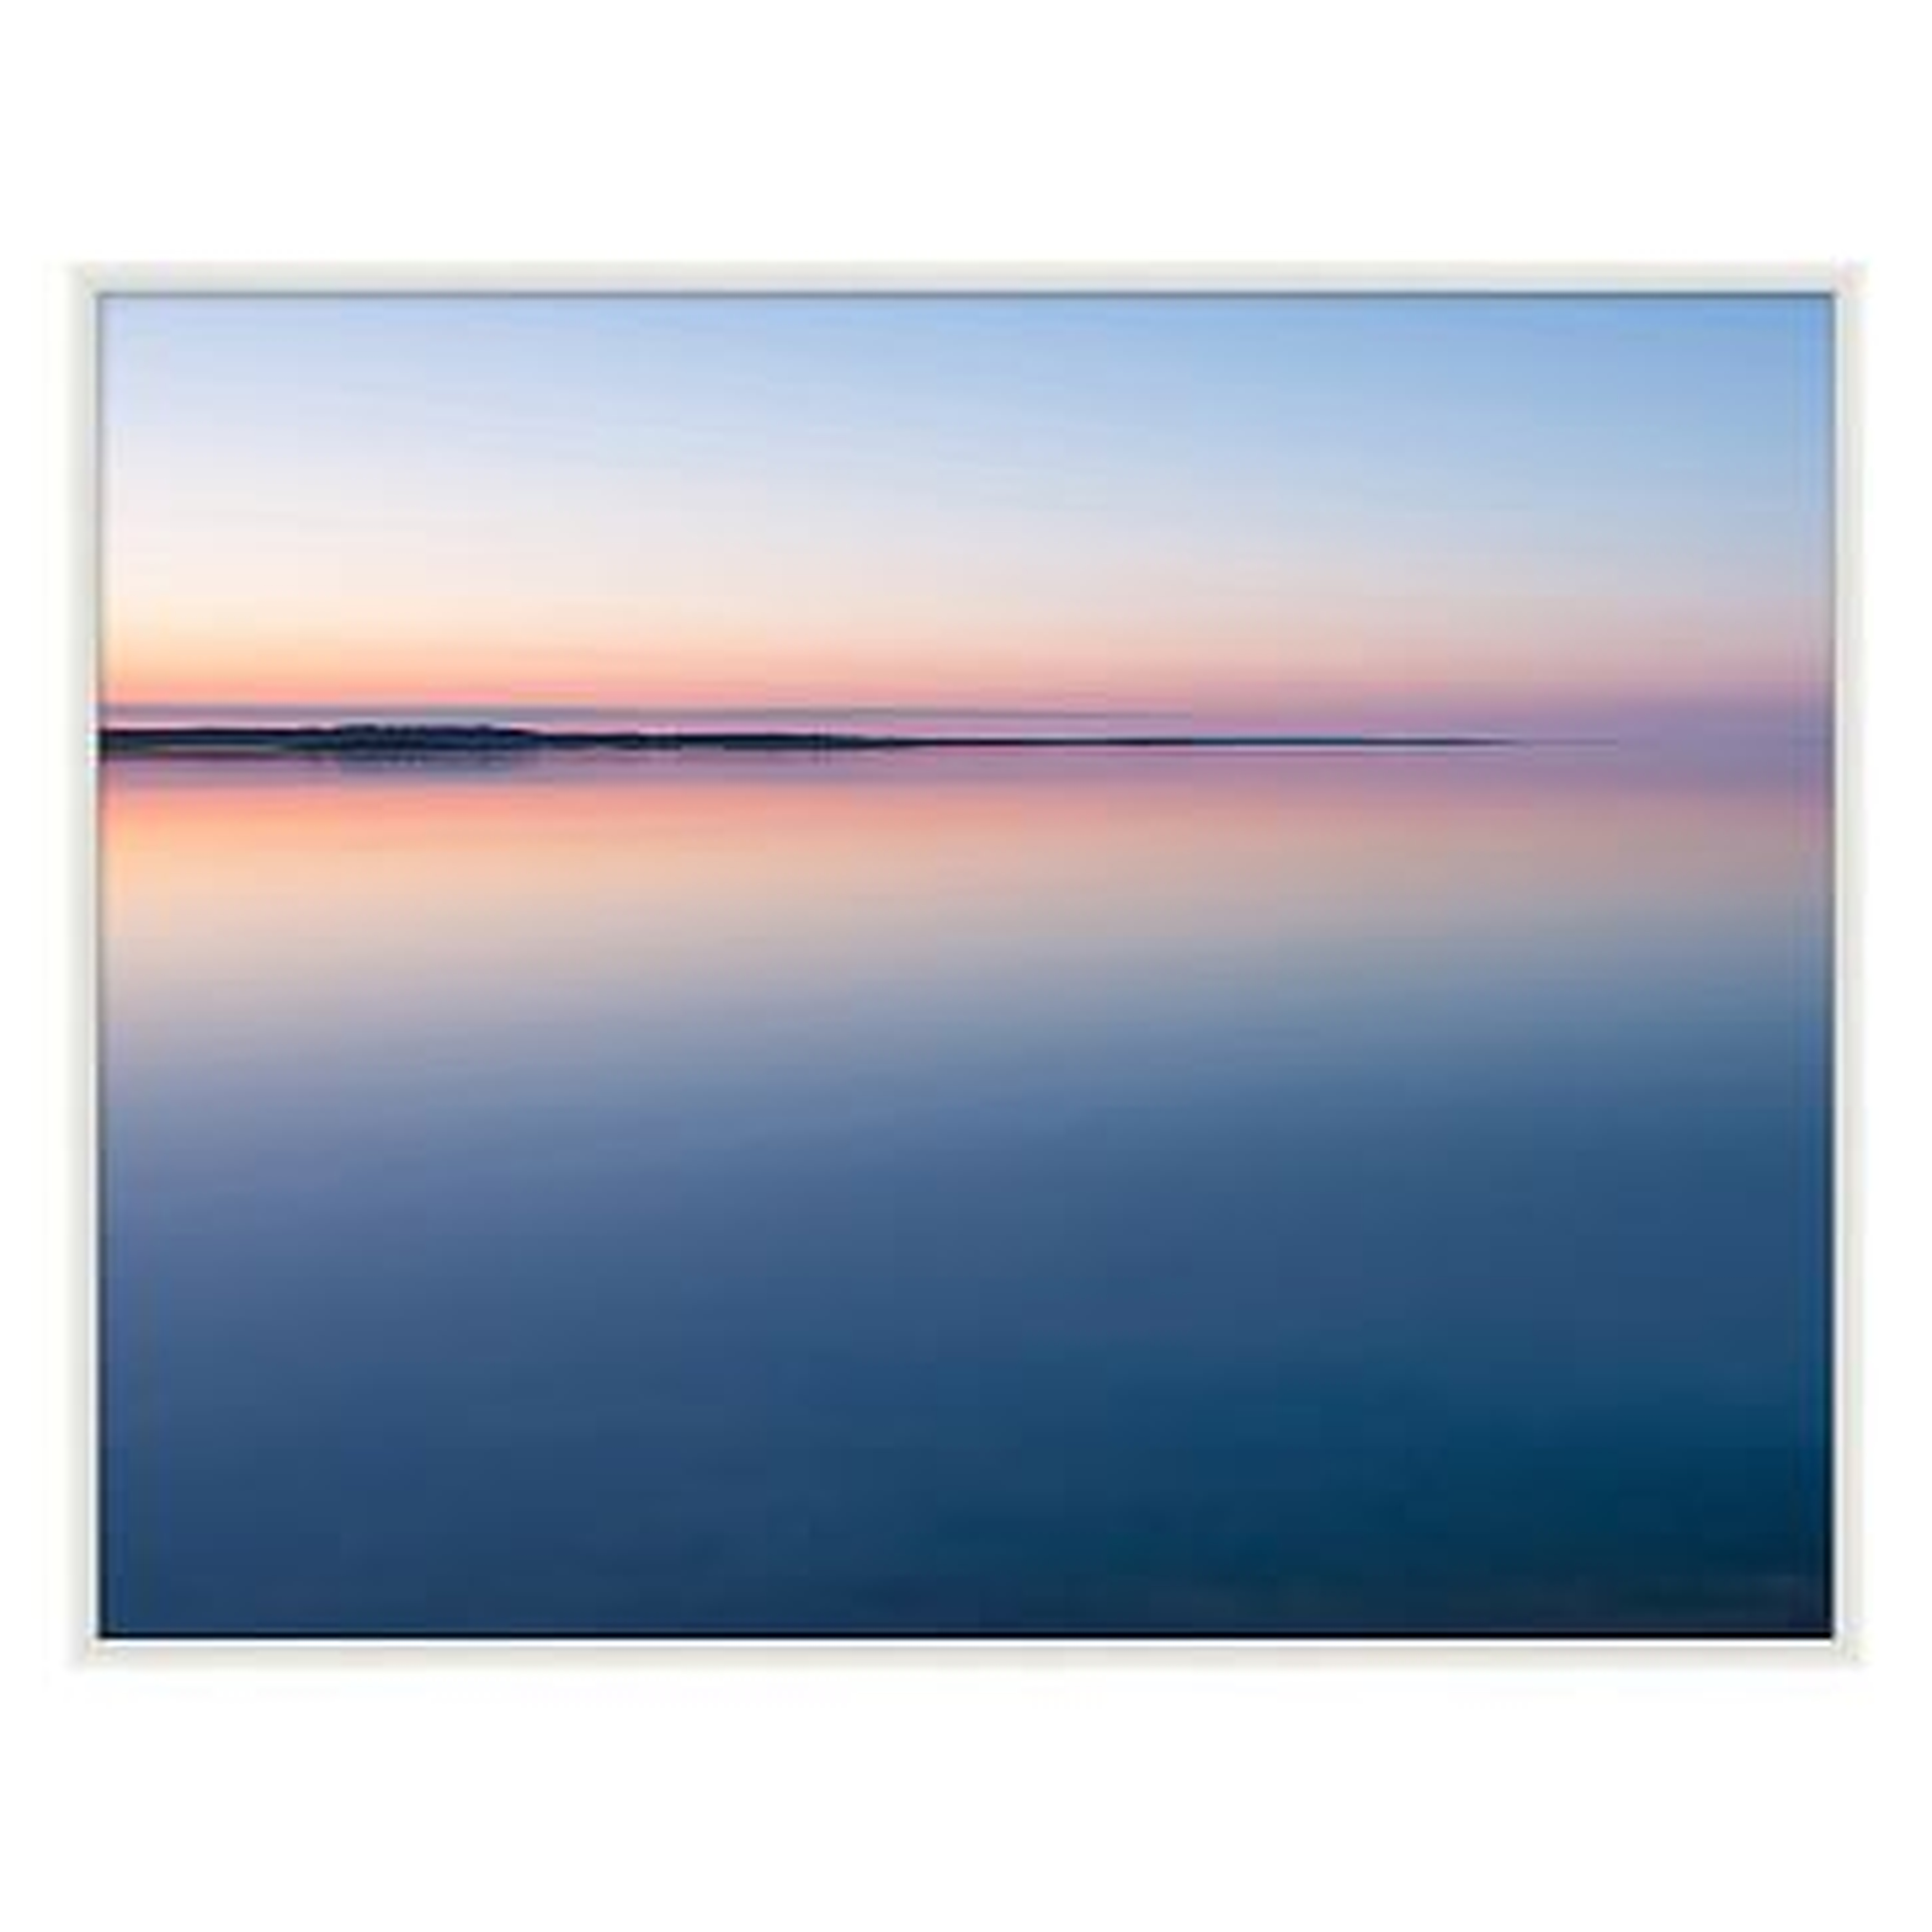 Ocean Sunrise 5 Photograph, Multi, Large - West Elm